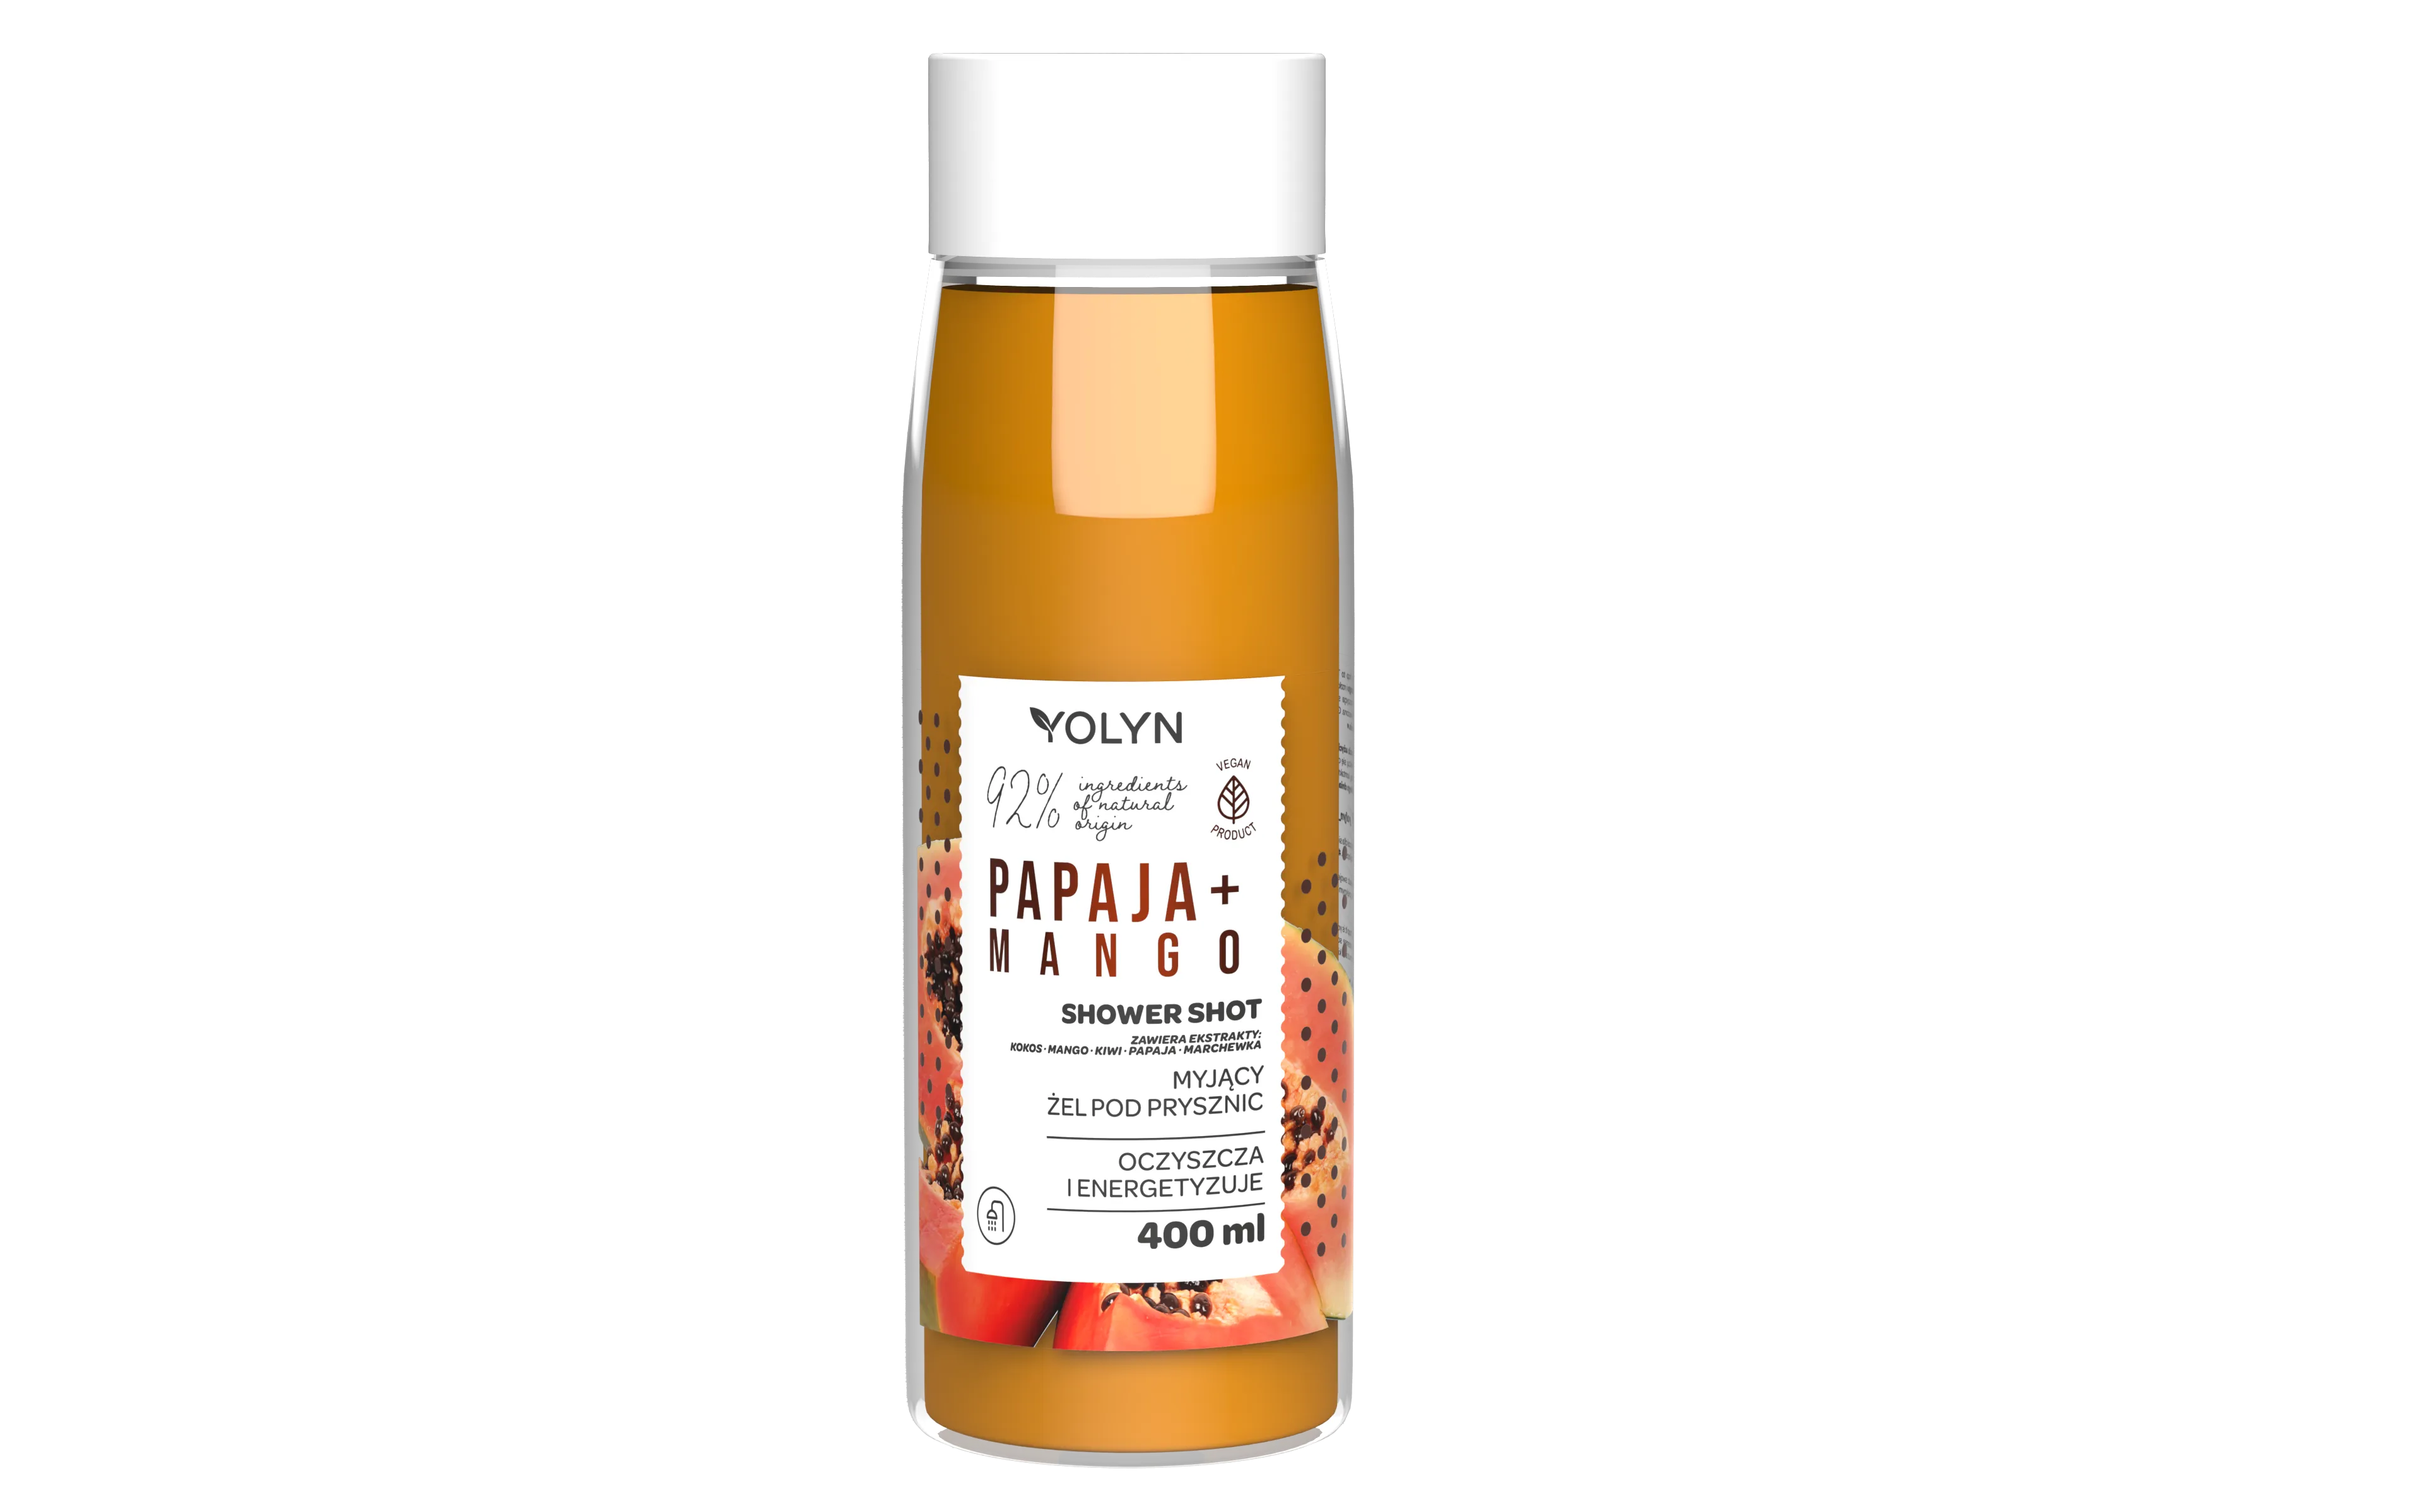 Yolyn Shower Shot żel pod prysznic papaja + mango, 400 ml